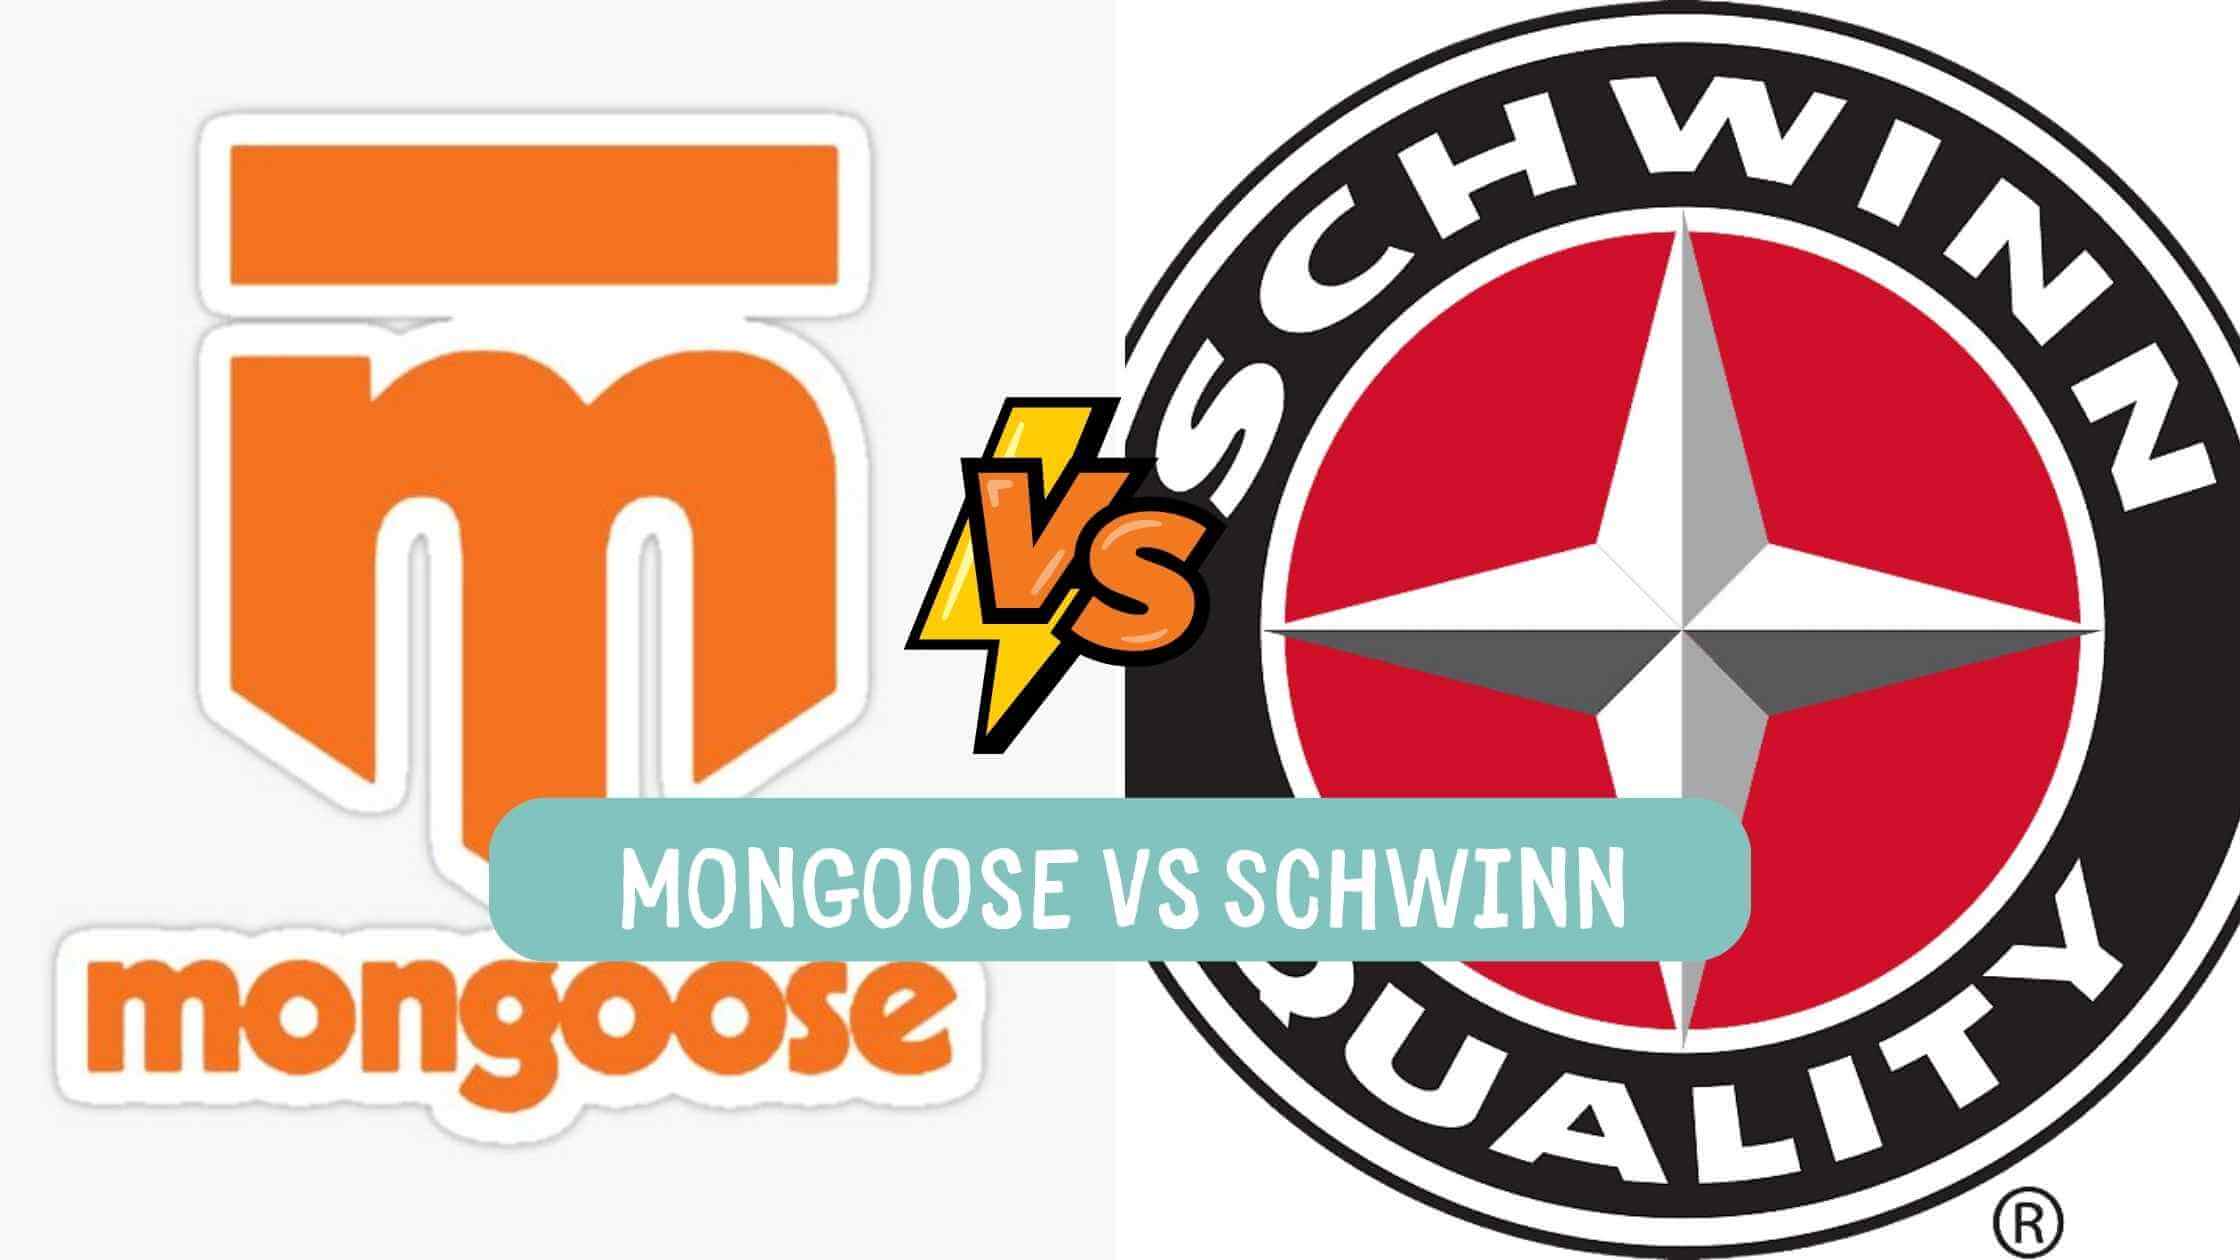 Mongoose vs Schwinn